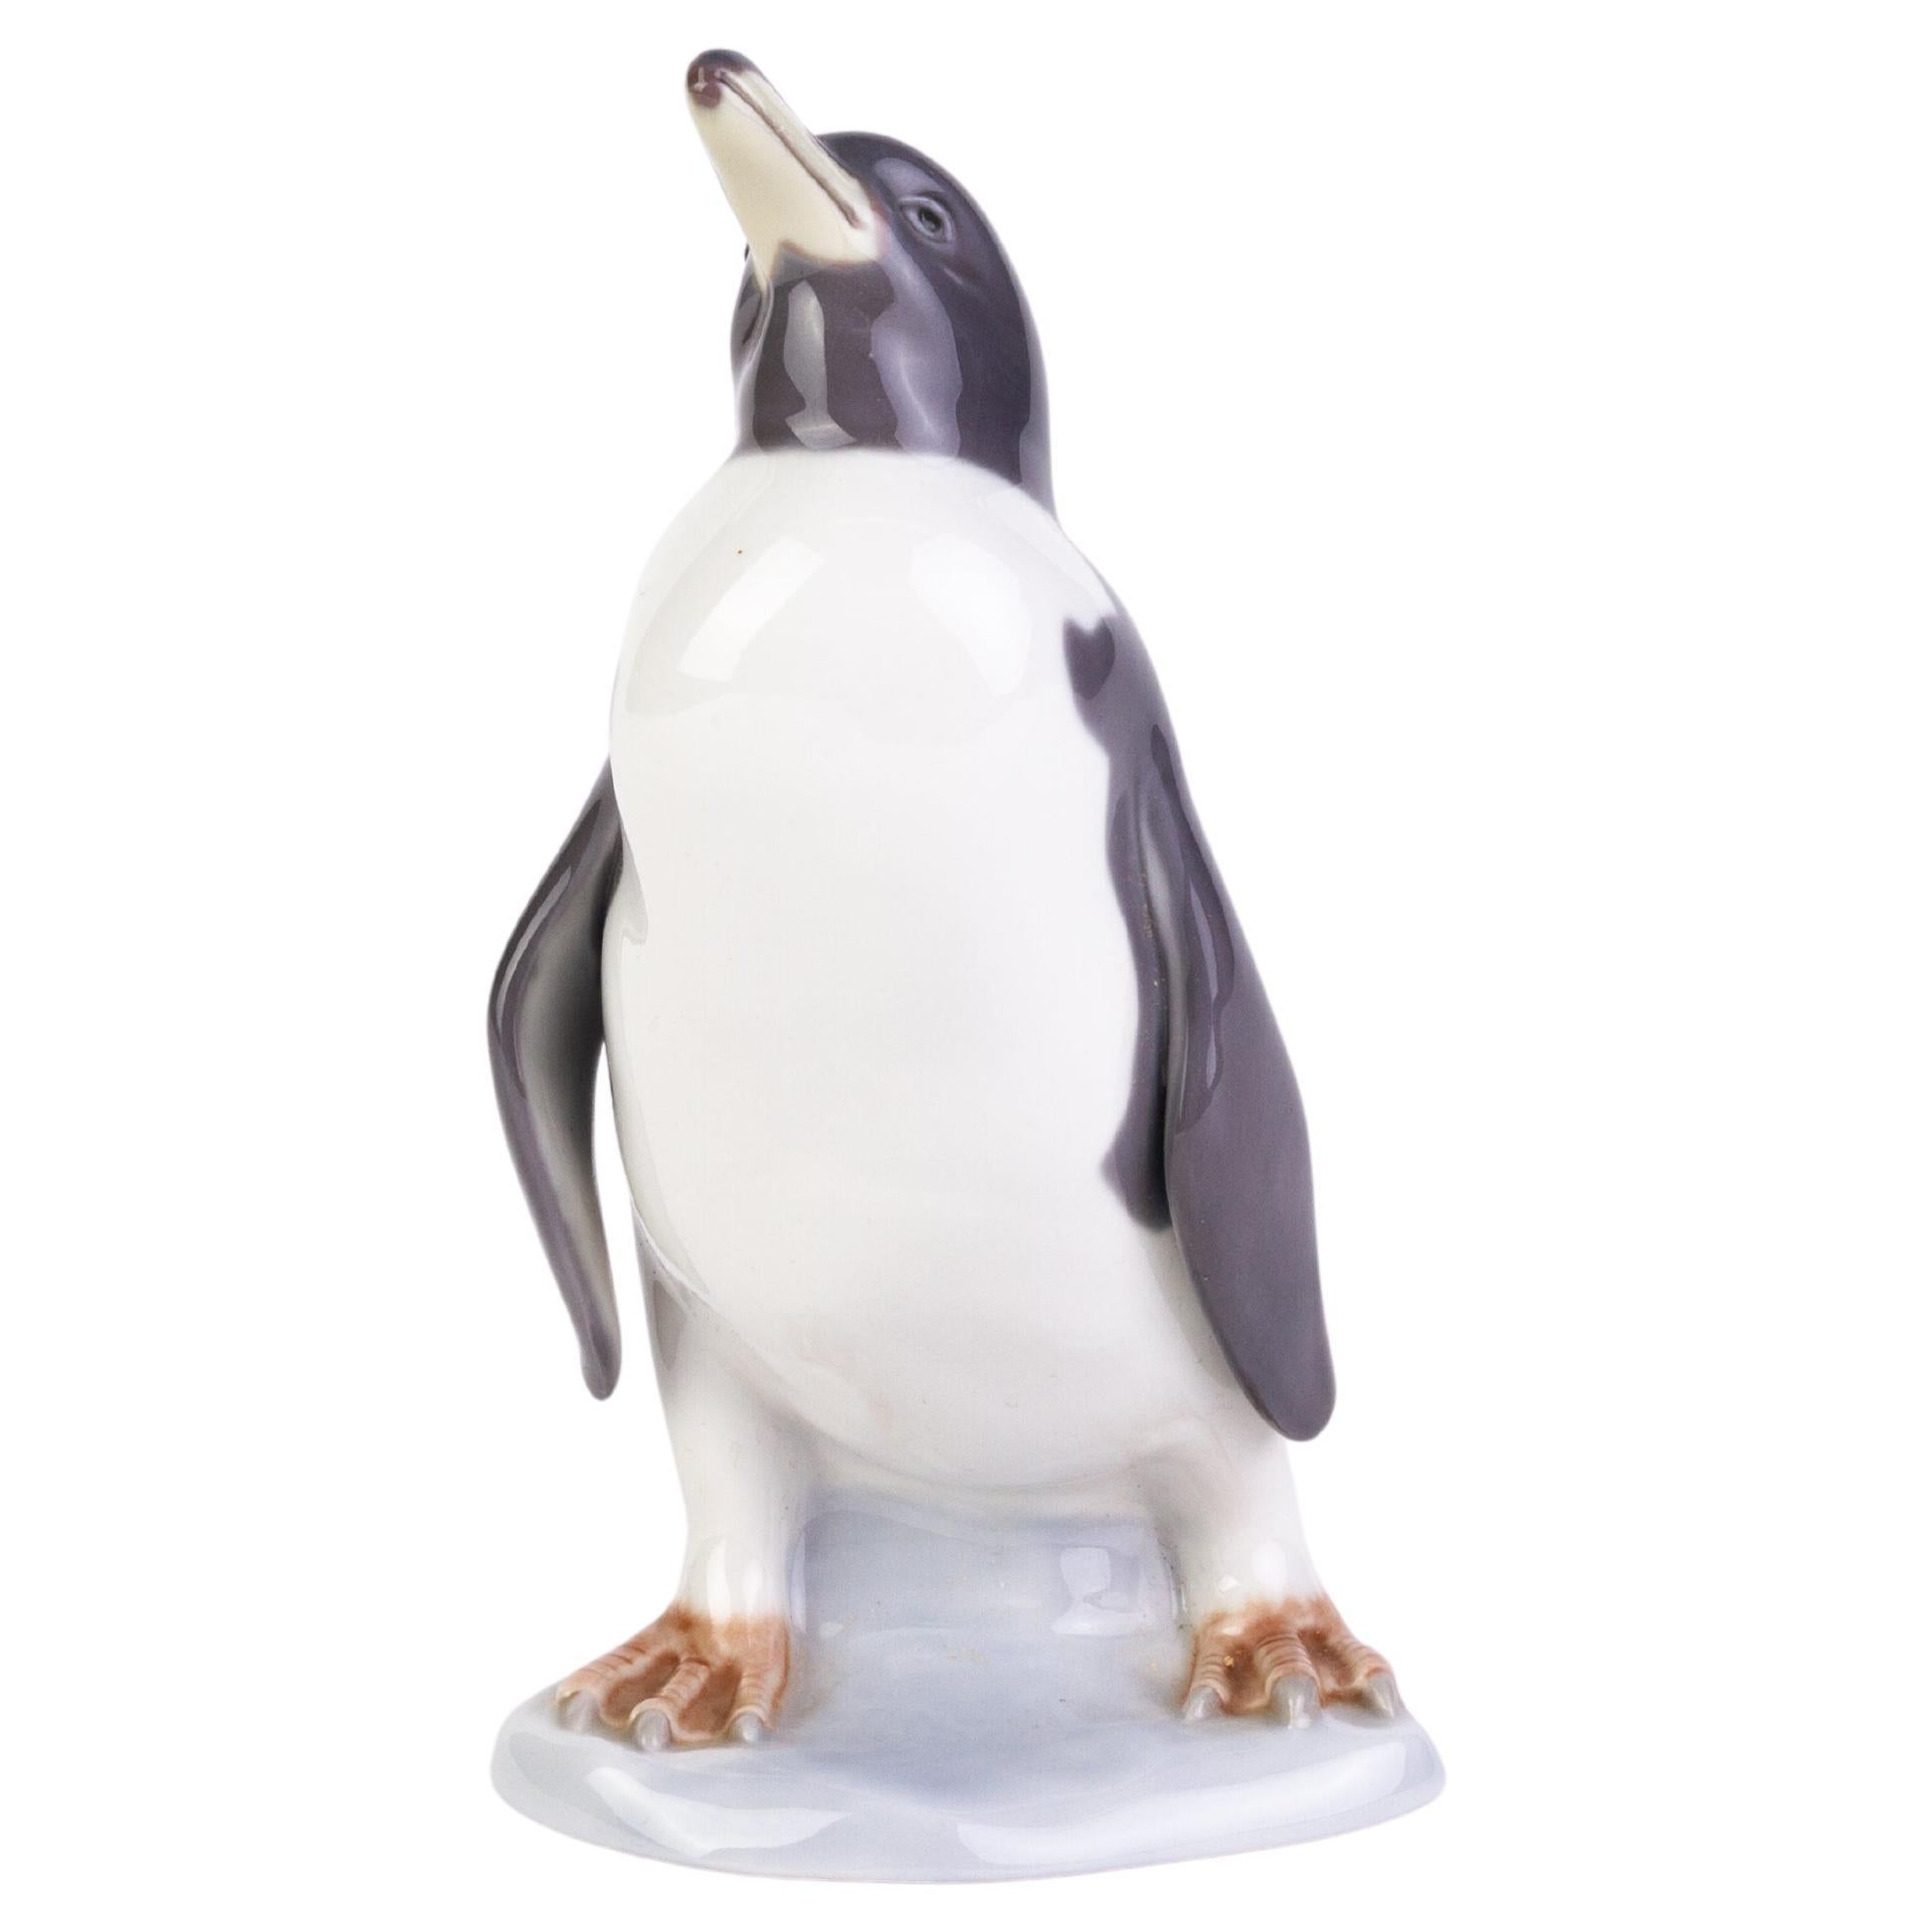 Retired Lladro Fine Porcelain Sculpture Figure Group "Penguin" 5247 For Sale